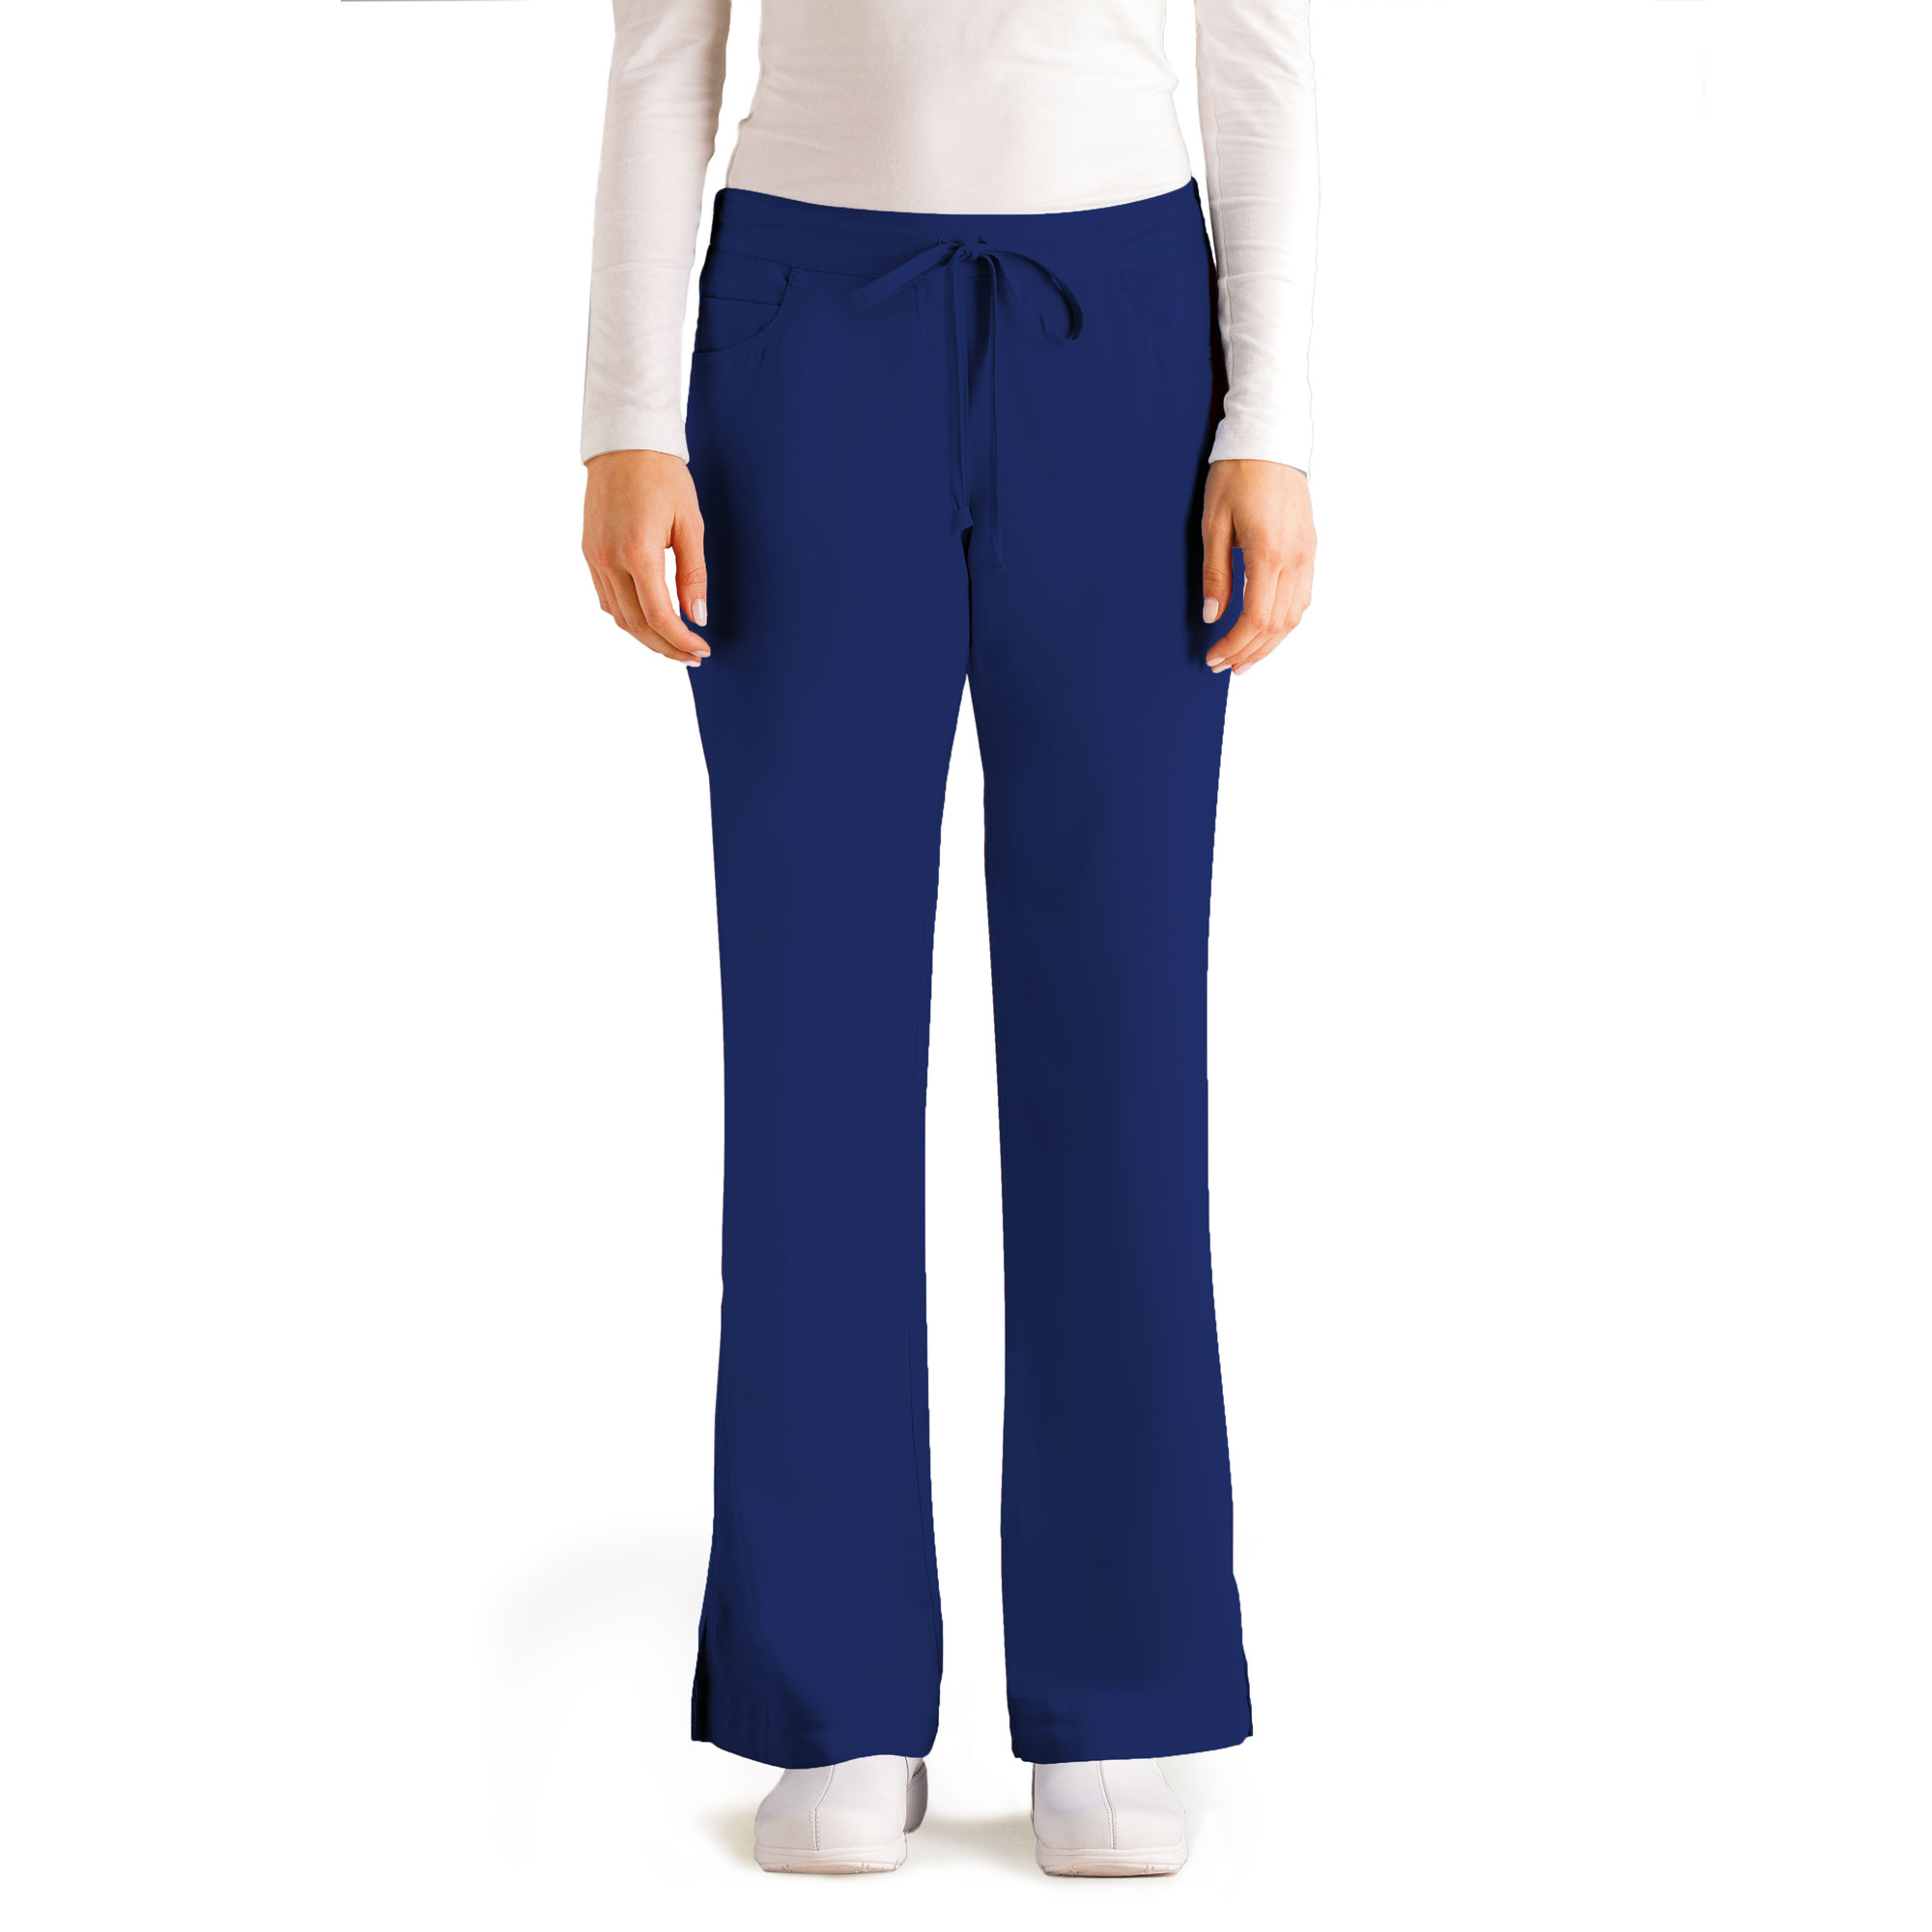 Buy 5 Pocket Drawstring Pant - Slom's Uniforms Online at Best price - PA